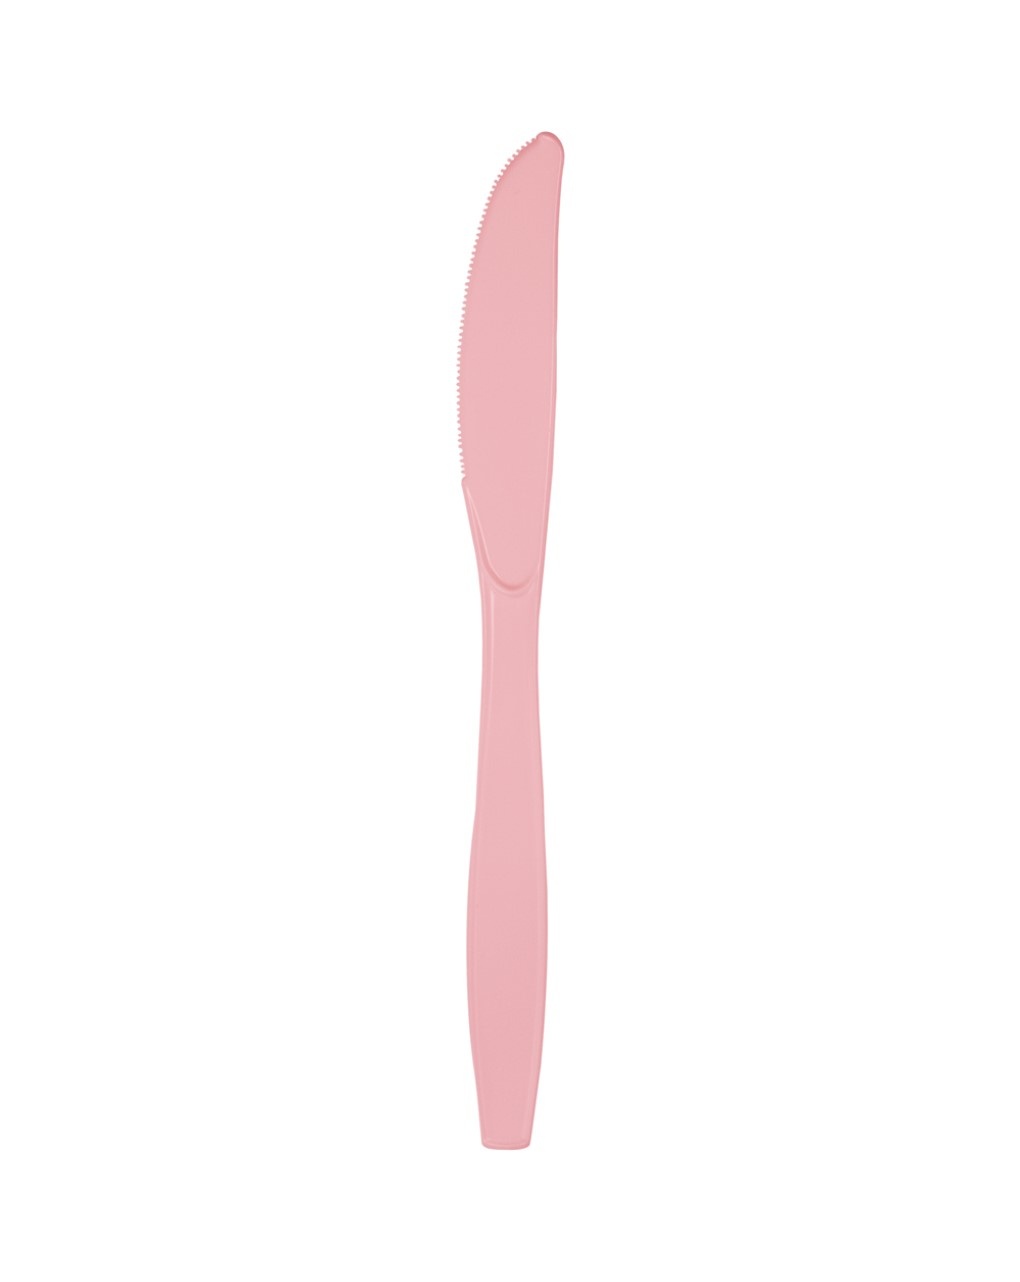 Coltello plastica h.17 cm -  24 pezzi - rosa pastello - Bigiemme